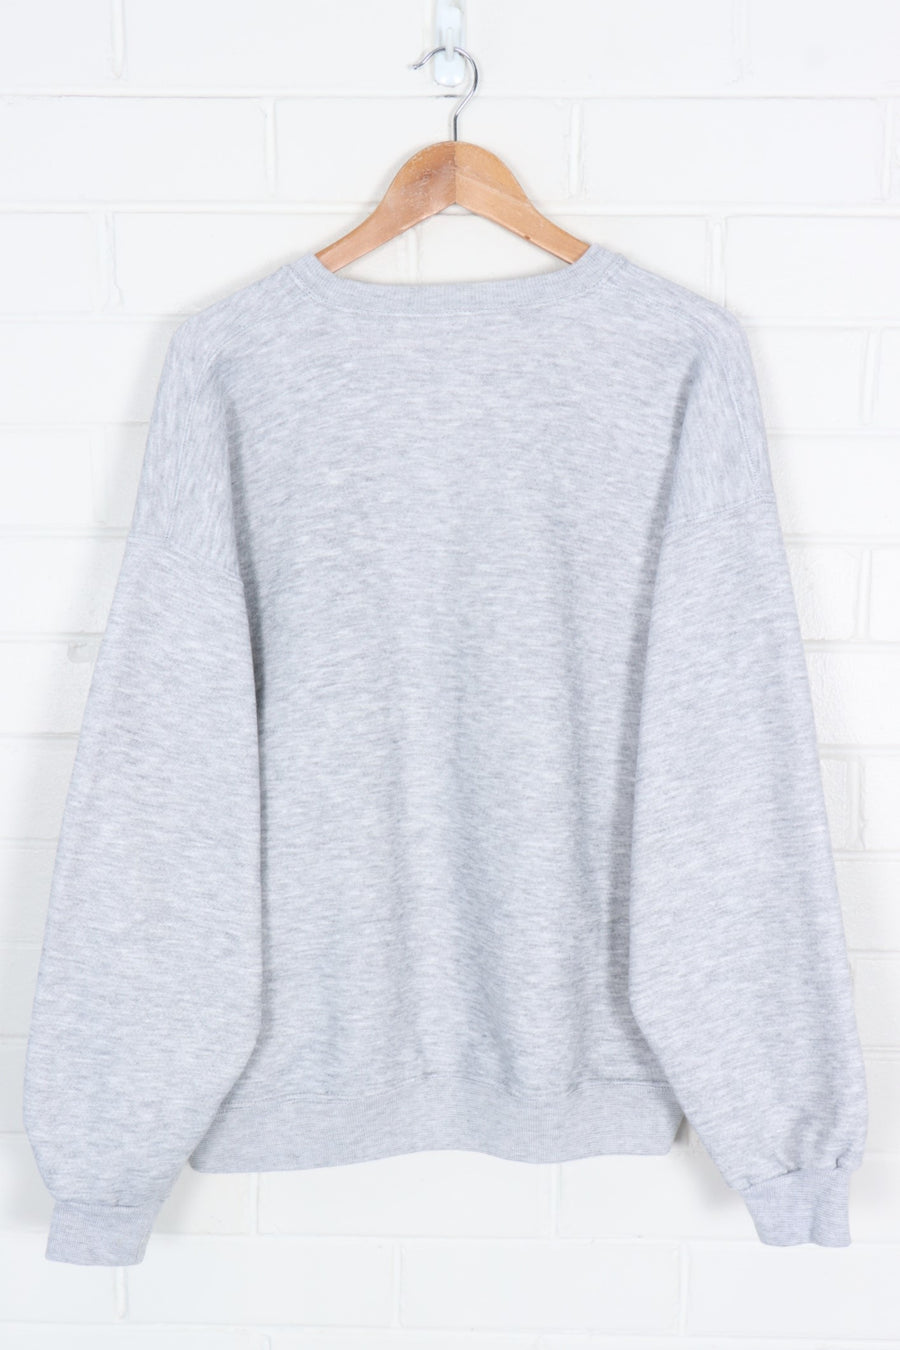 USA Embroidered Grey Marle Sweatshirt USA Made (XXL)